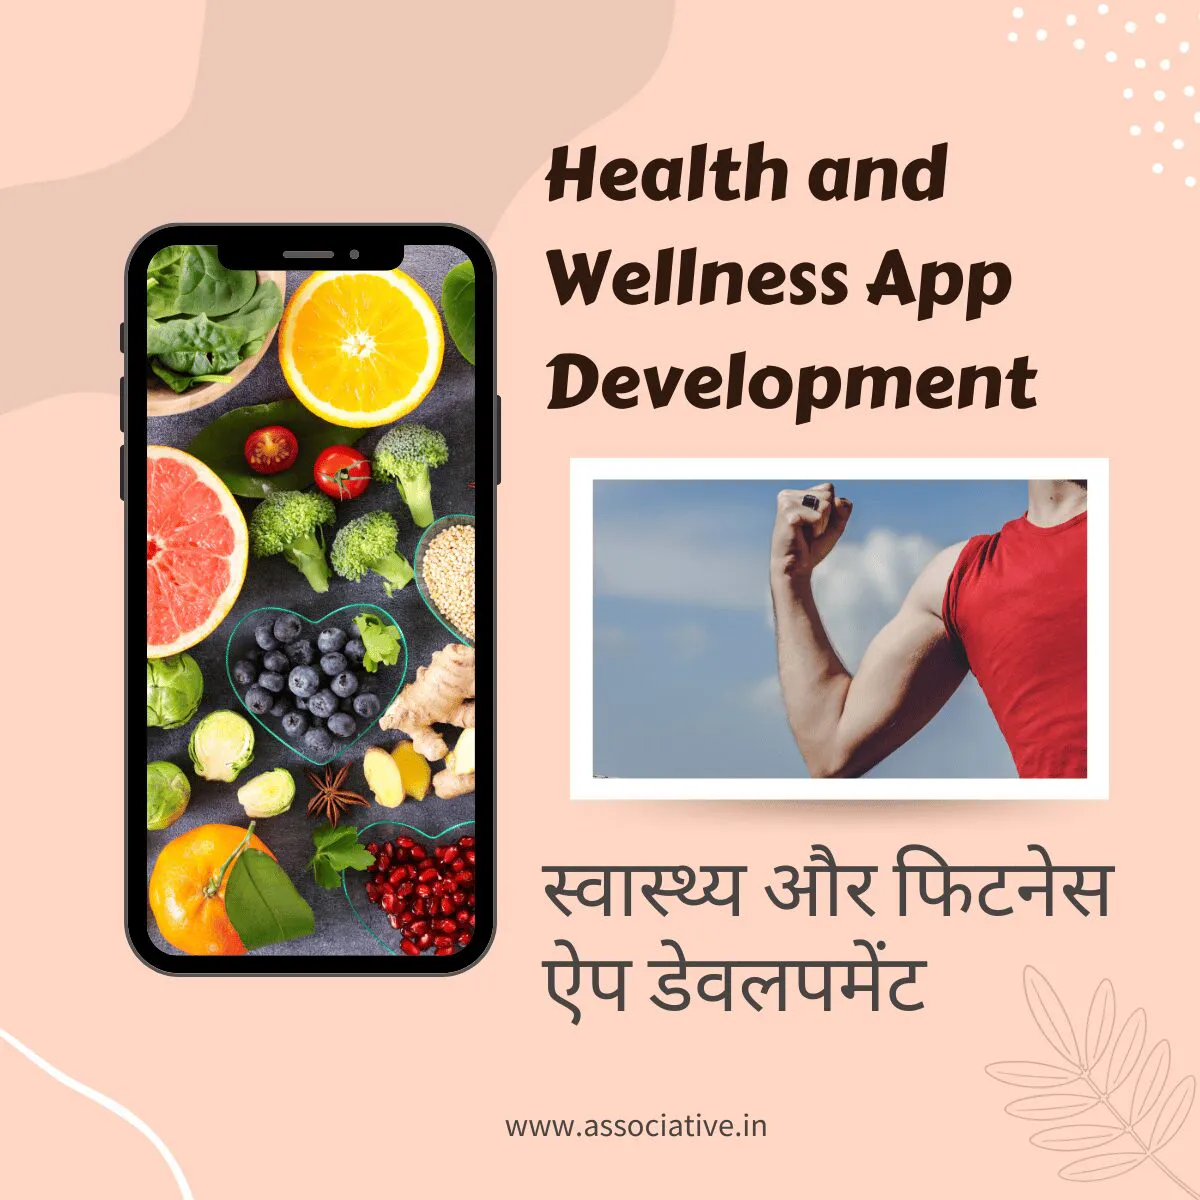 Health and Wellness App Development